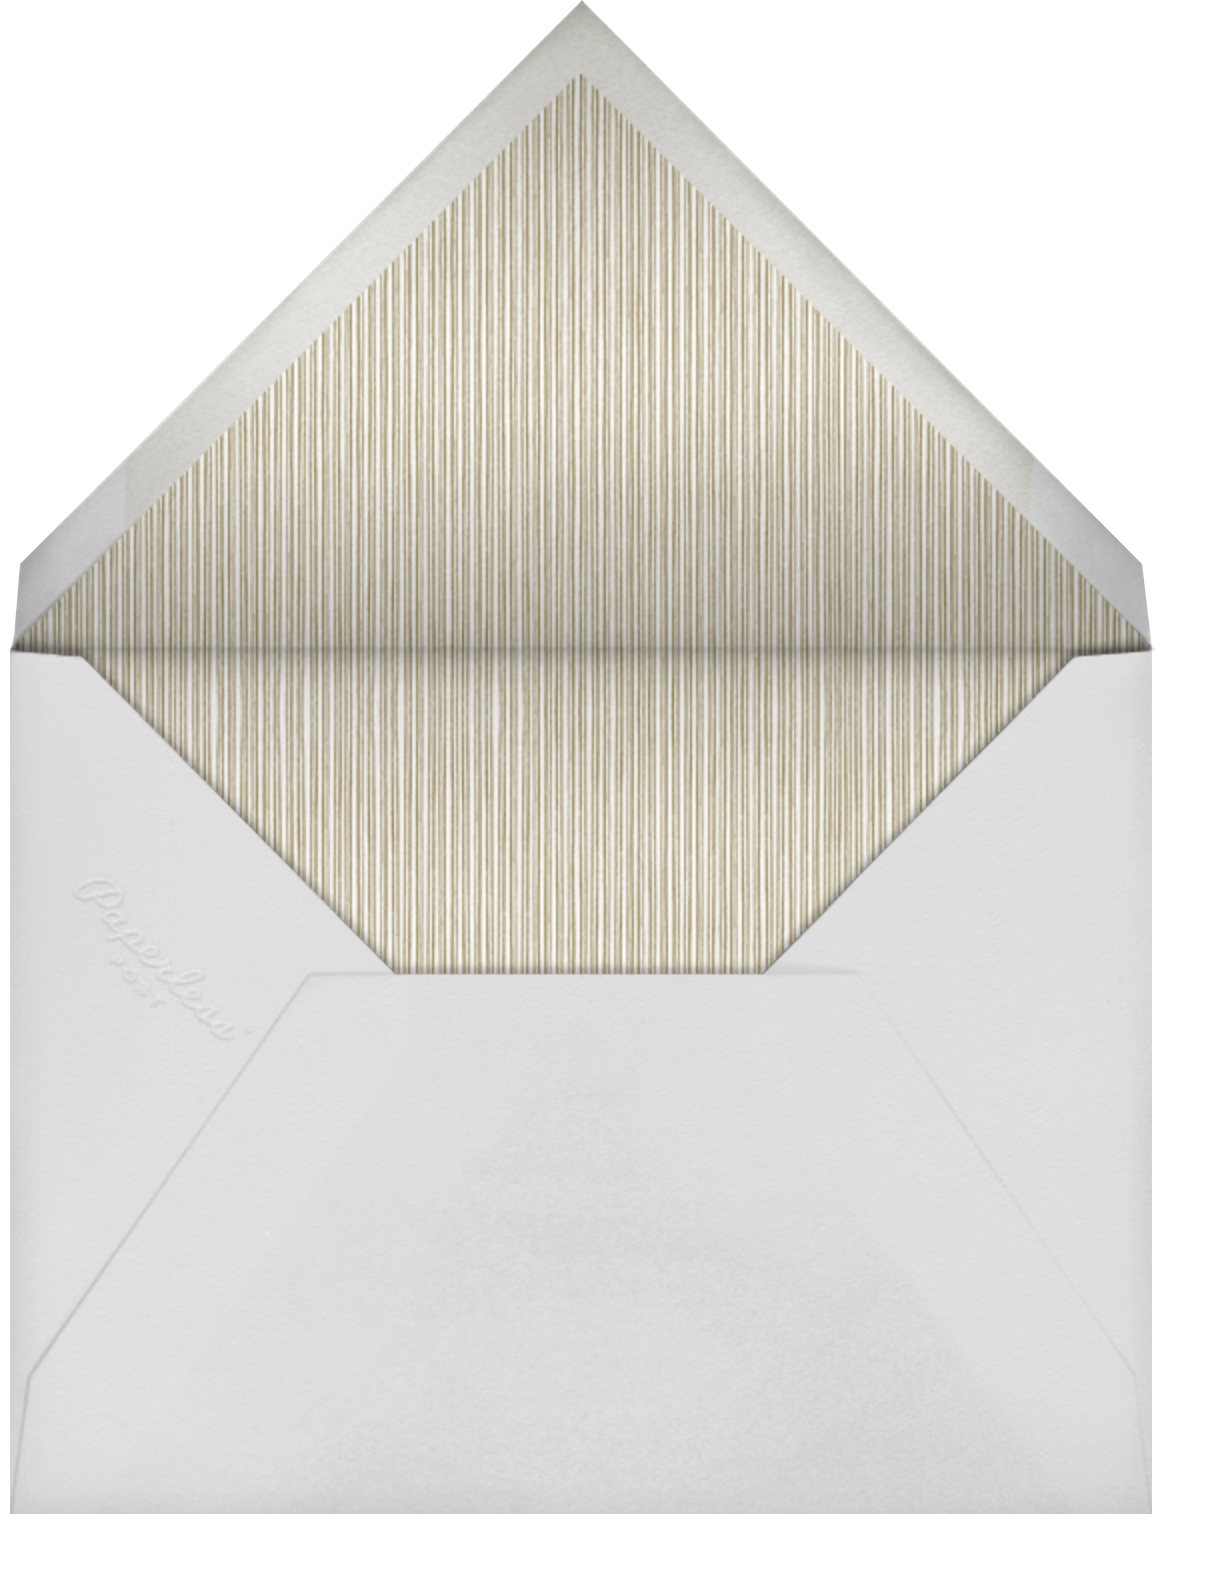 Antler Tangle - Tall - Paperless Post - Envelope